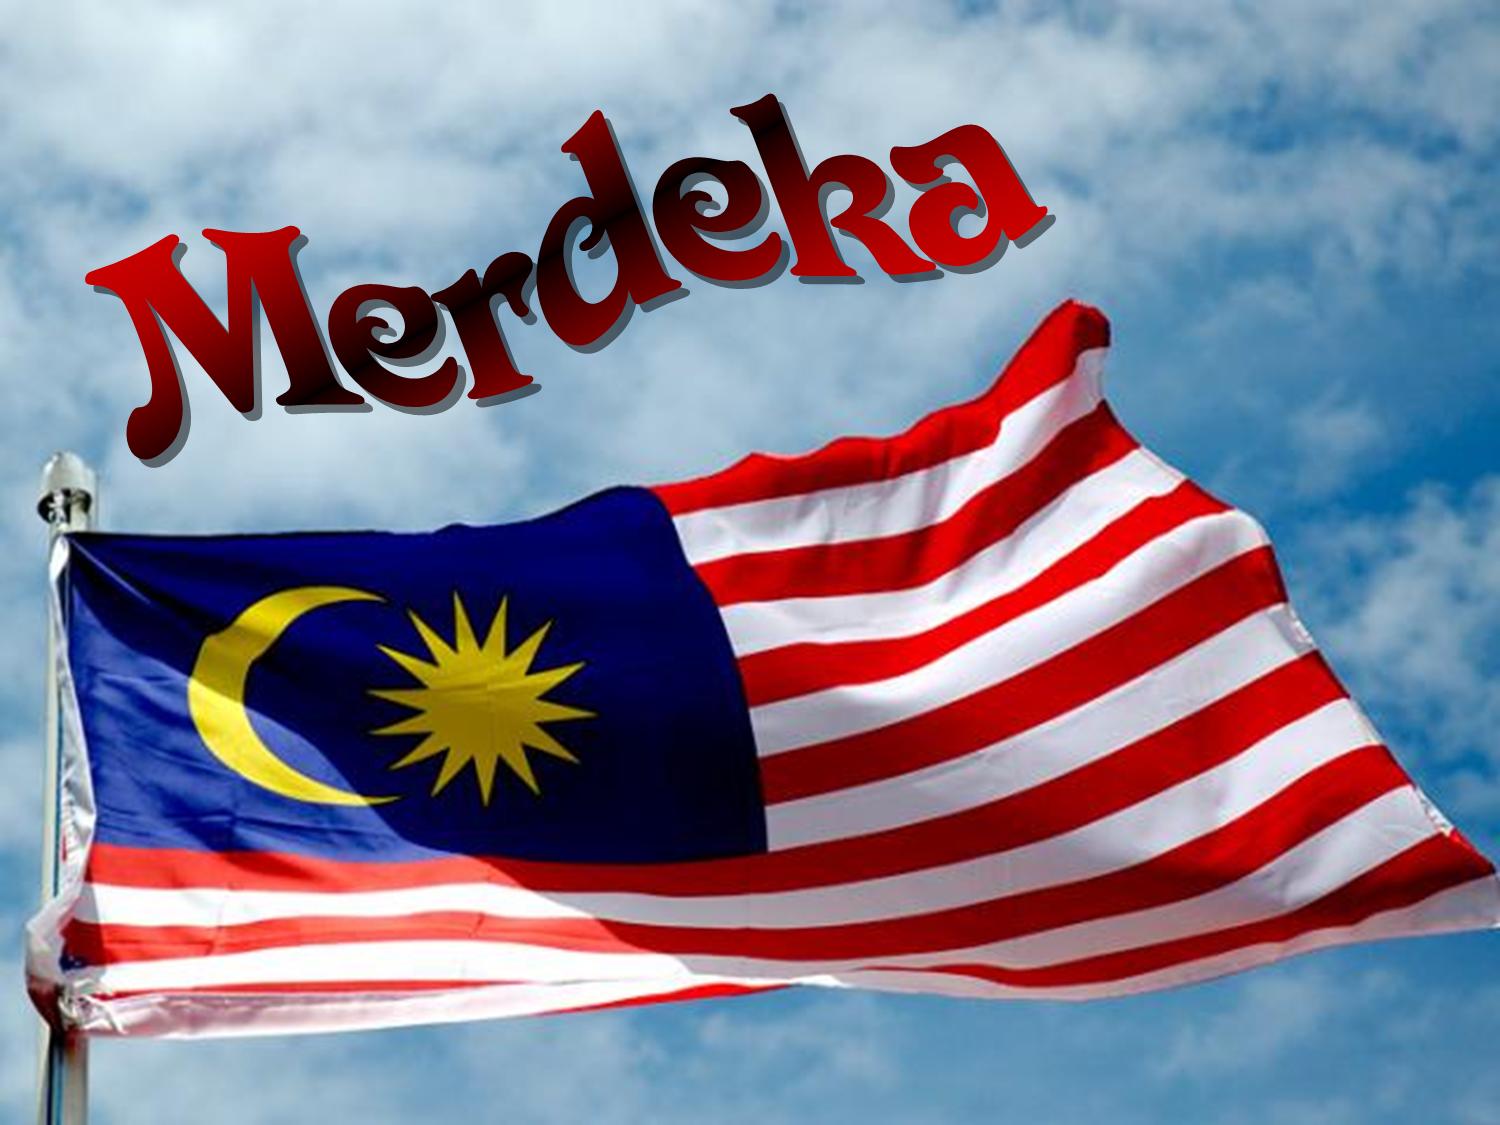 https://blogger.googleusercontent.com/img/b/R29vZ2xl/AVvXsEj4nJbjk9dD8Umz_YEtg2t7kTTP1wqZjFfRpeyCG31aPwSTgZGmfSWlGrVkU5jklBaMoDJwrI1hw6L0miZum0frdjCcRLDBm0ca6XPRNnIAgWf3jVvEvQ09pGbo4bdgAb3SCZAPIeY22yw/s1600/malaysia-bendera-jalur-gemilang-merdeka.jpg